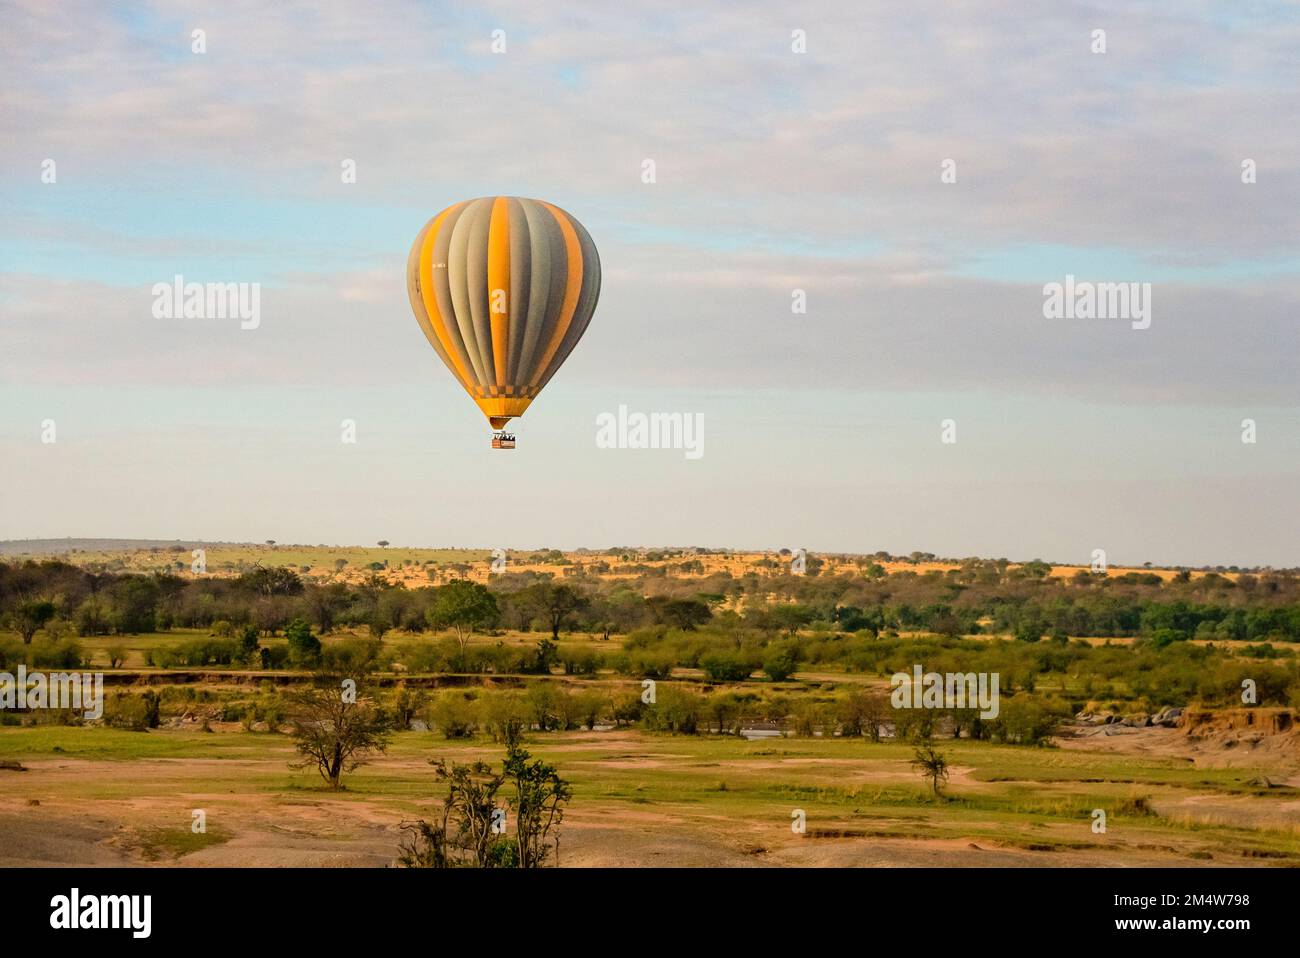 Hot air balloon over the Serengeti National Park in Tanzania Stock Photo